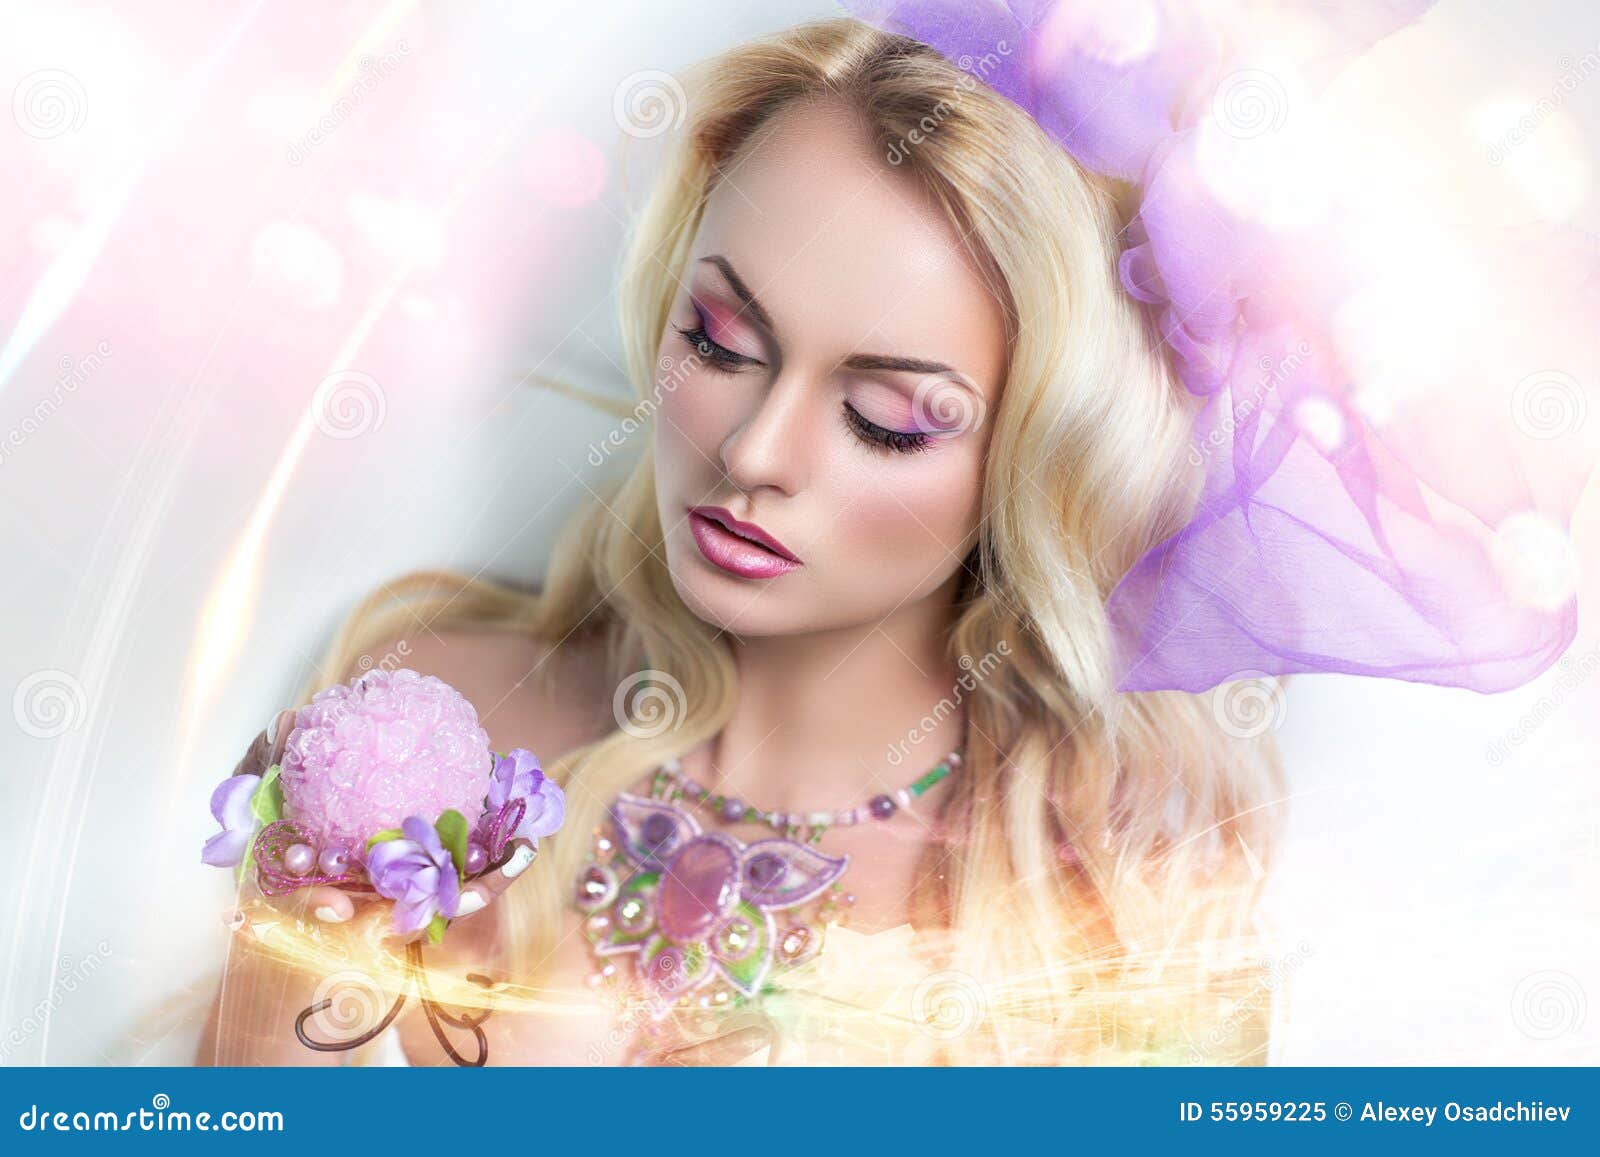 Barbie girl stock image. Image of magic, curls, feminine - 55959225